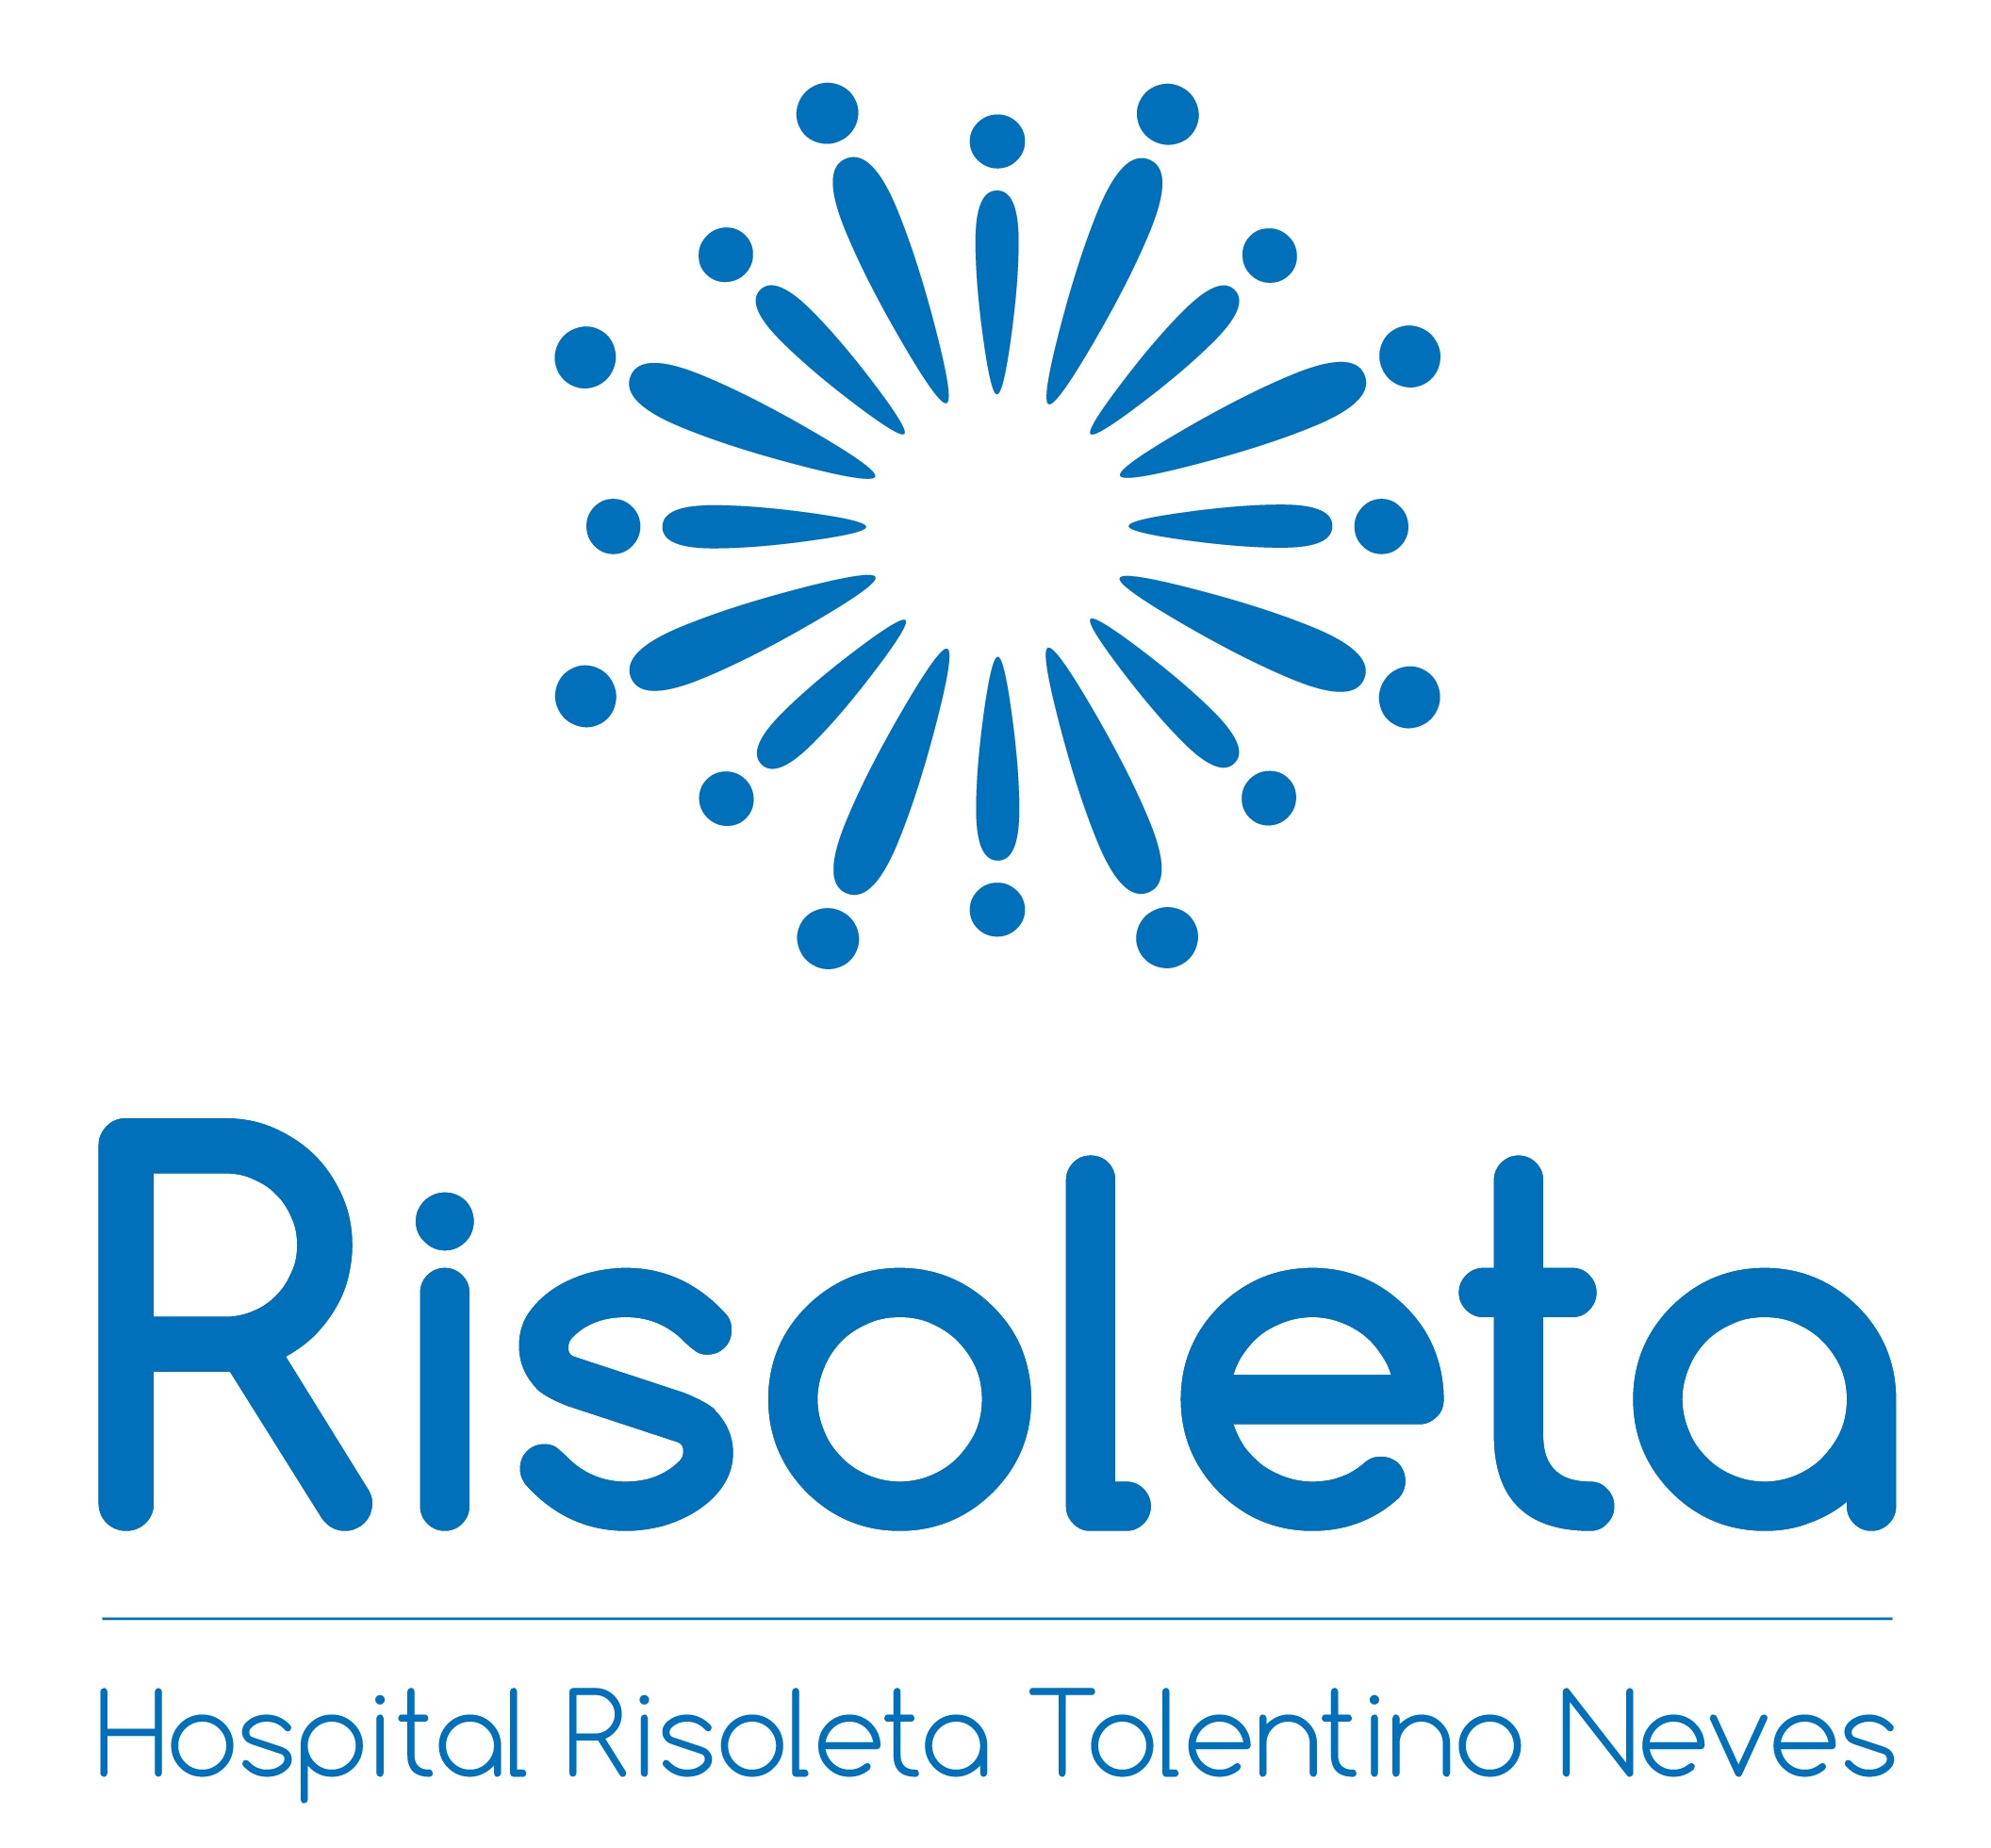 HOSPITAL RISOLETA TOLENTINO NEVES - HRTN